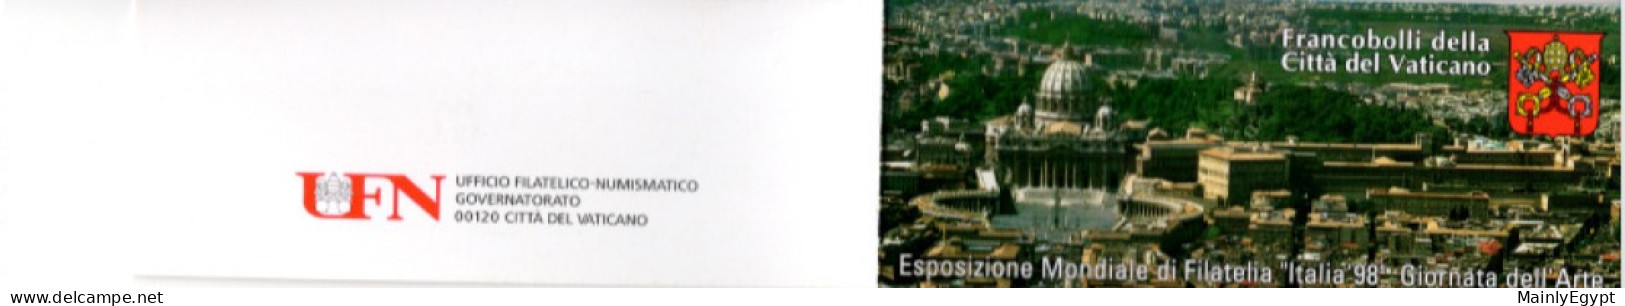 VATICAN Booklet 1998 Complete, Int'l Stamp Exhibition Milan, Good Shepherd  #F150 - Booklets